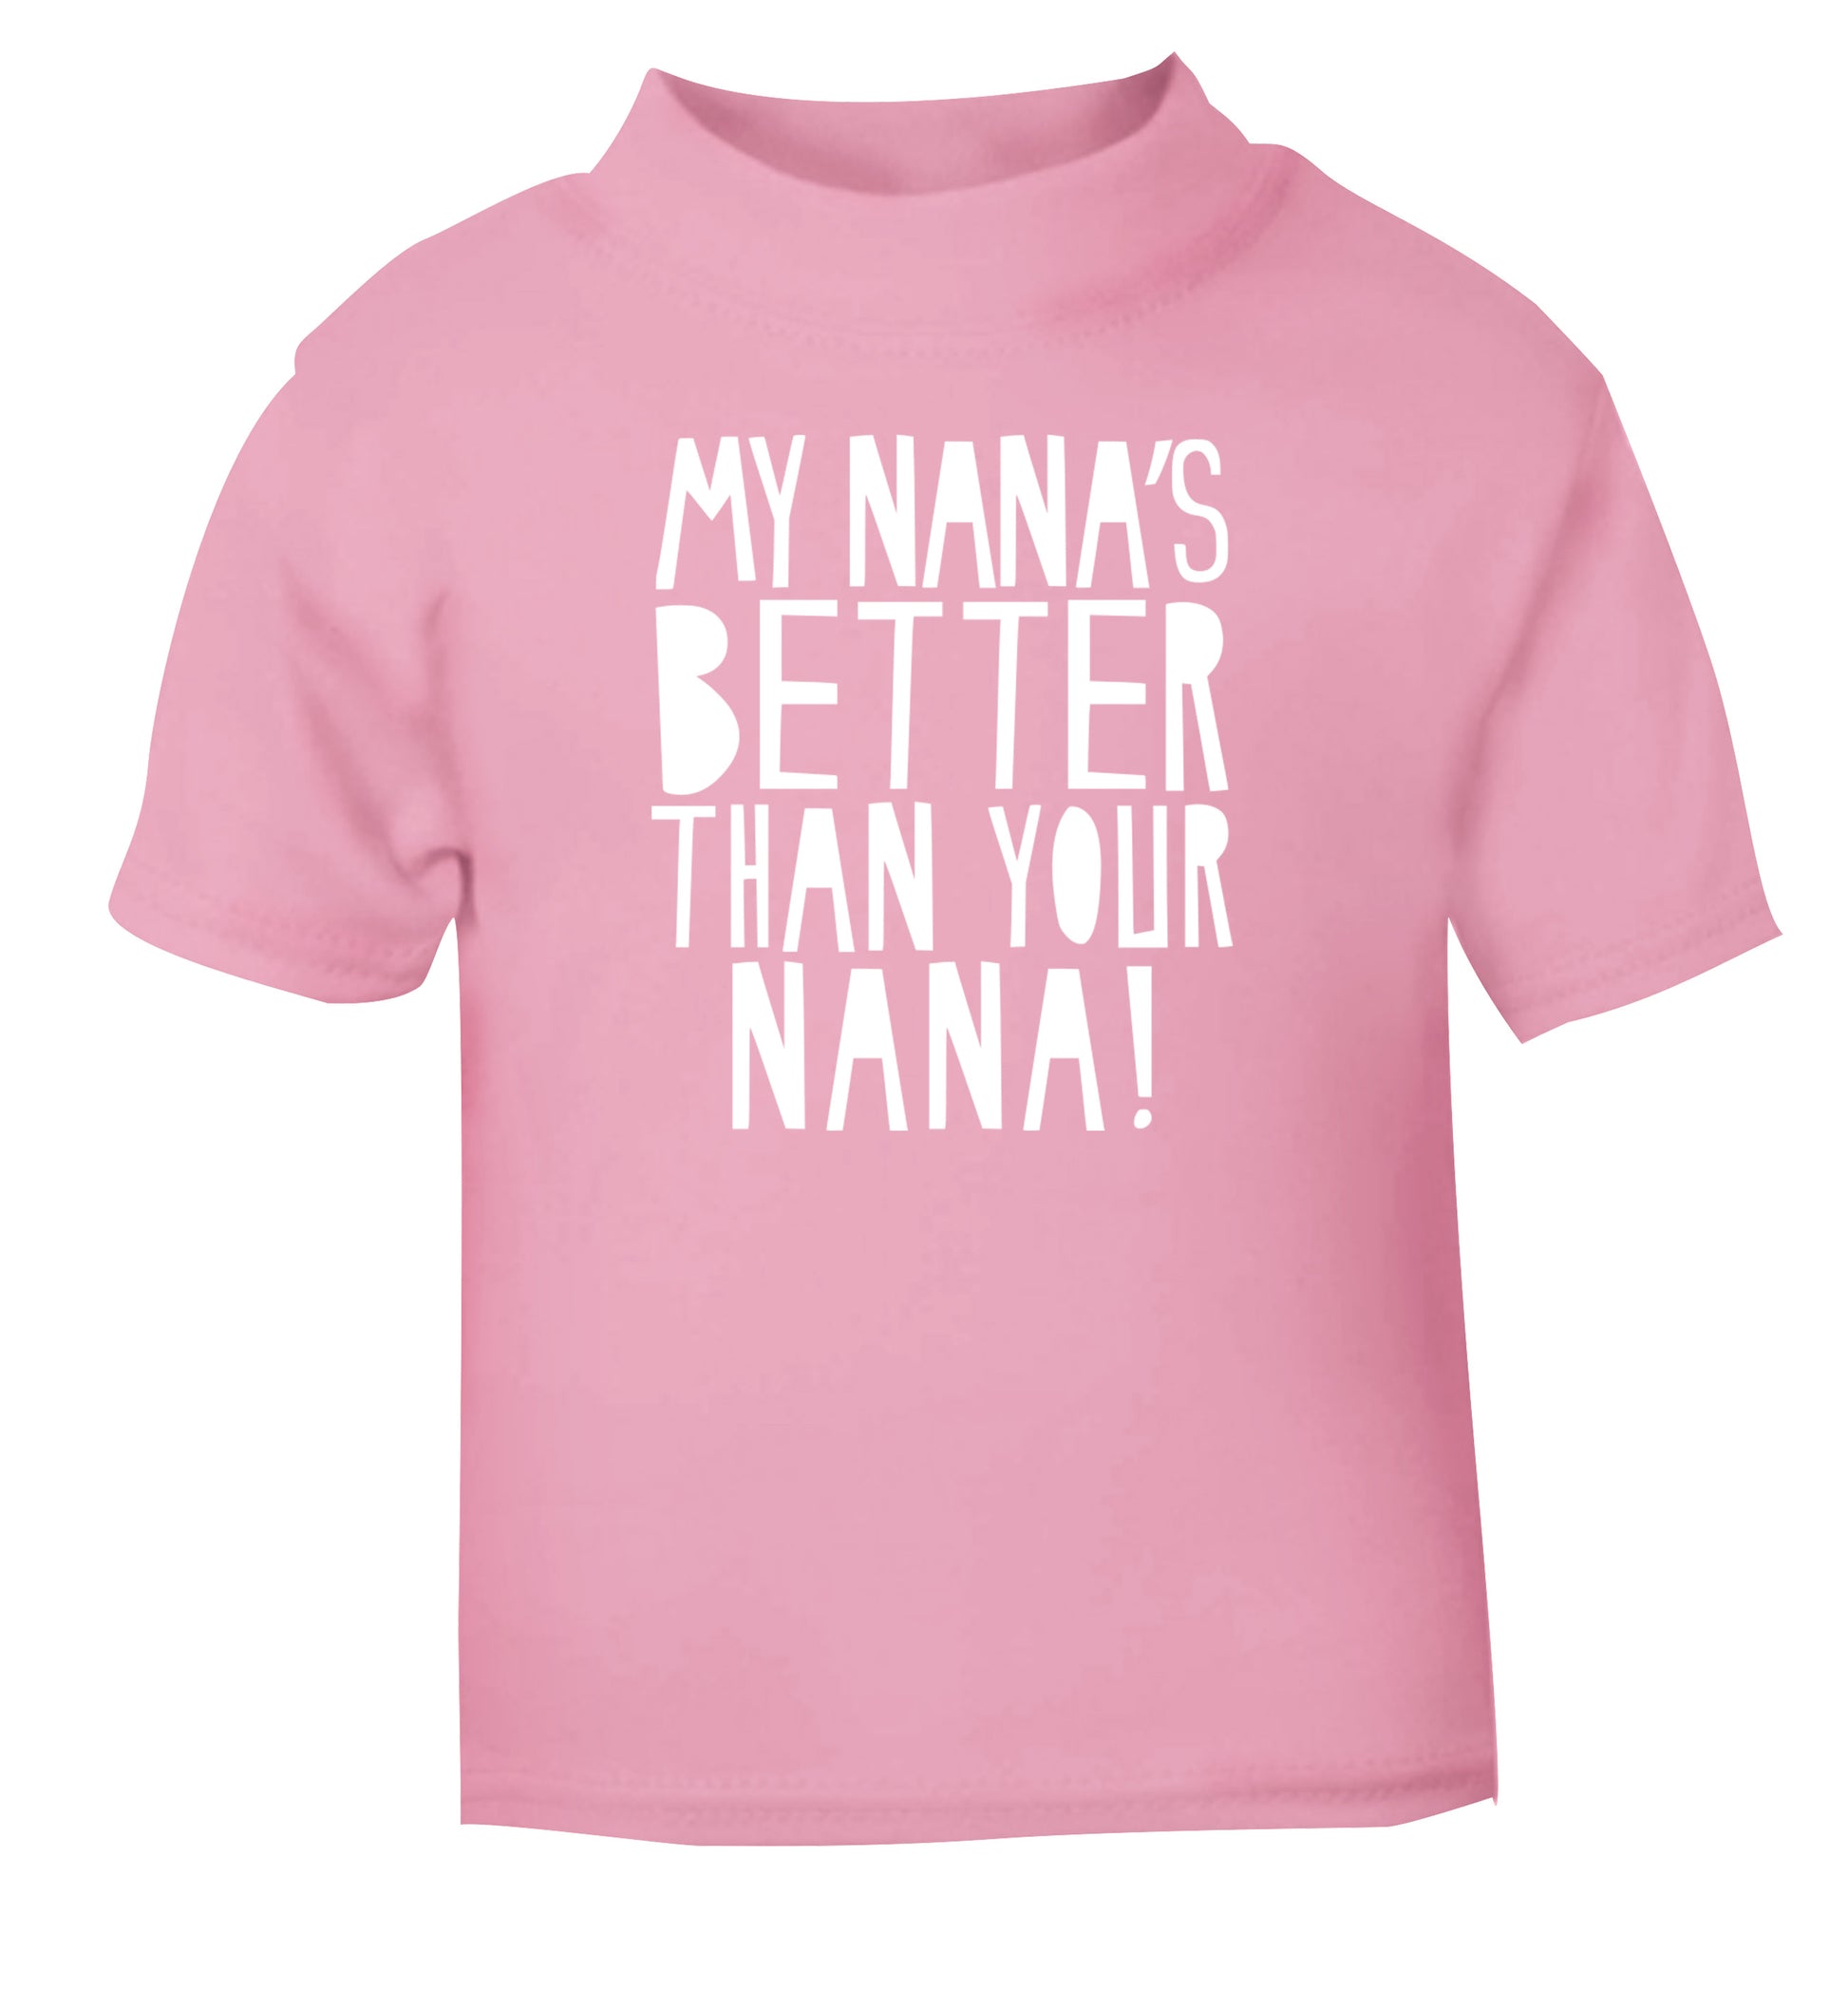 My nana's better than your nana light pink Baby Toddler Tshirt 2 Years